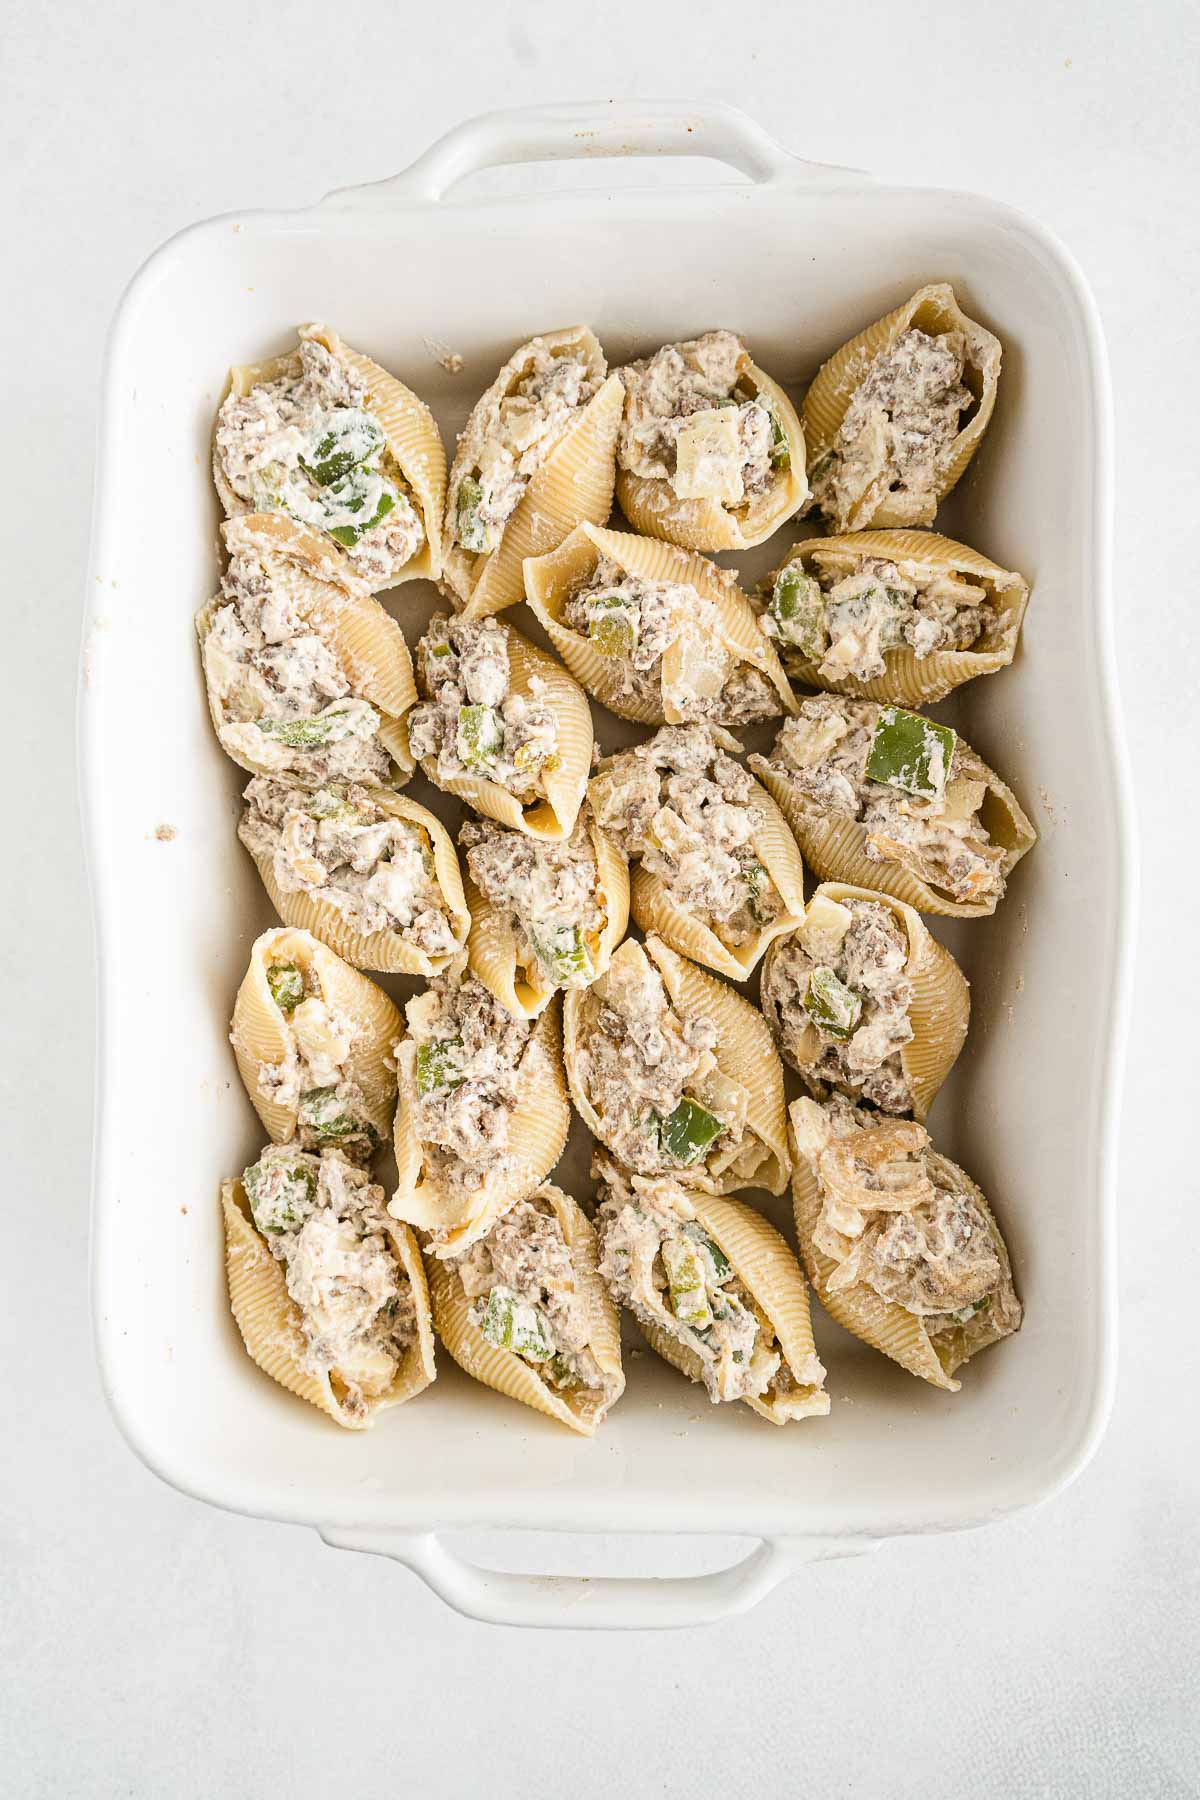 twenty stuffed pasta shells in a white casserole dish